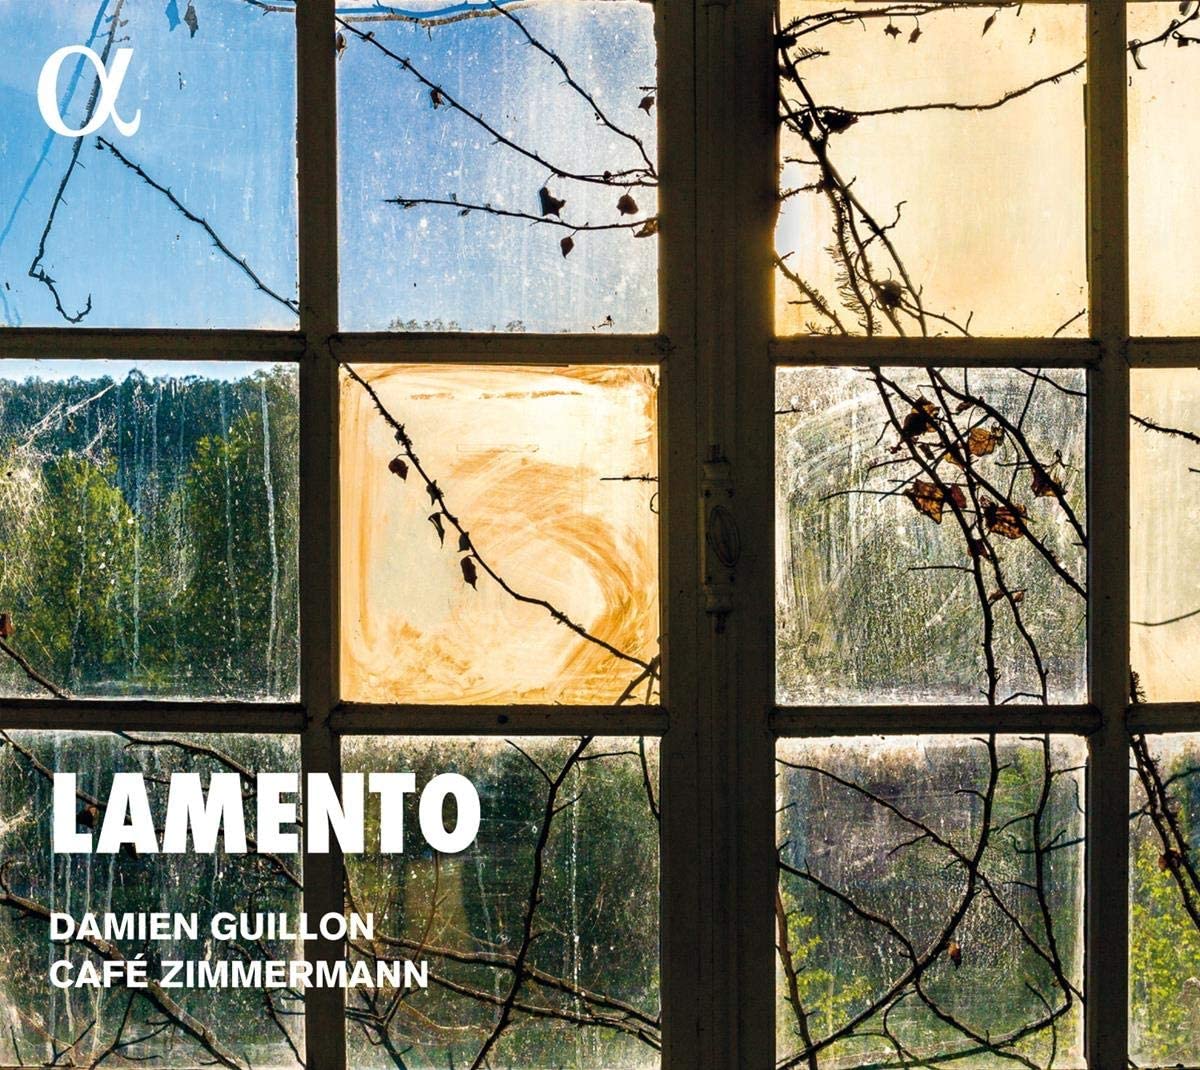 CD cover of Lamento Damien Guillon Cafe Zimmermann